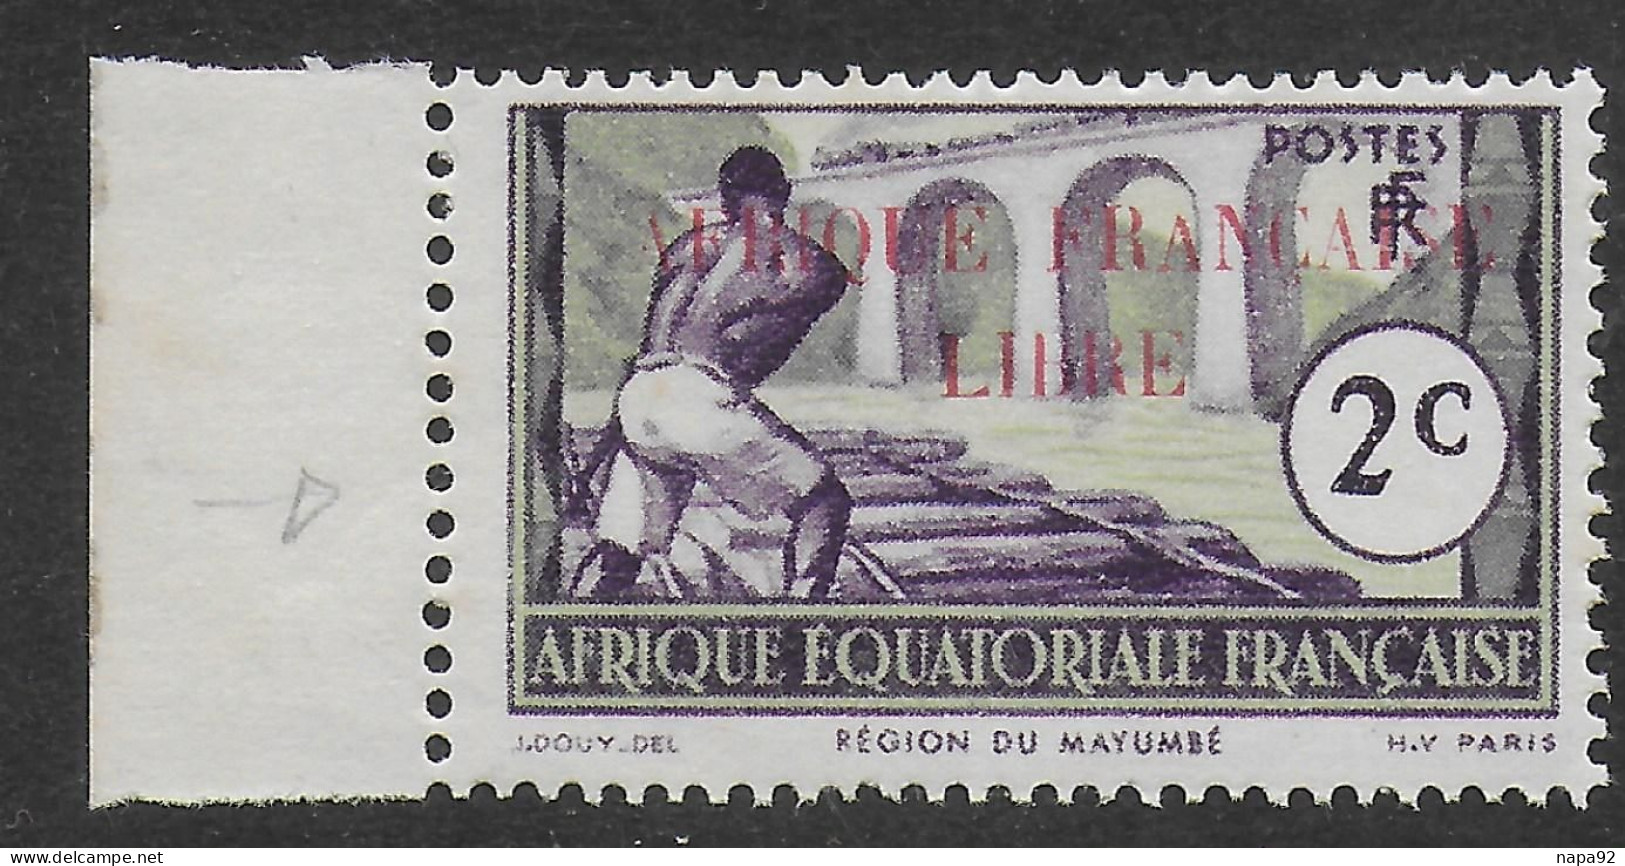 AFRIQUE EQUATORIALE FRANCAISE - AEF - A.E.F. - 1940 - YT 93** - VARIETE - Ongebruikt